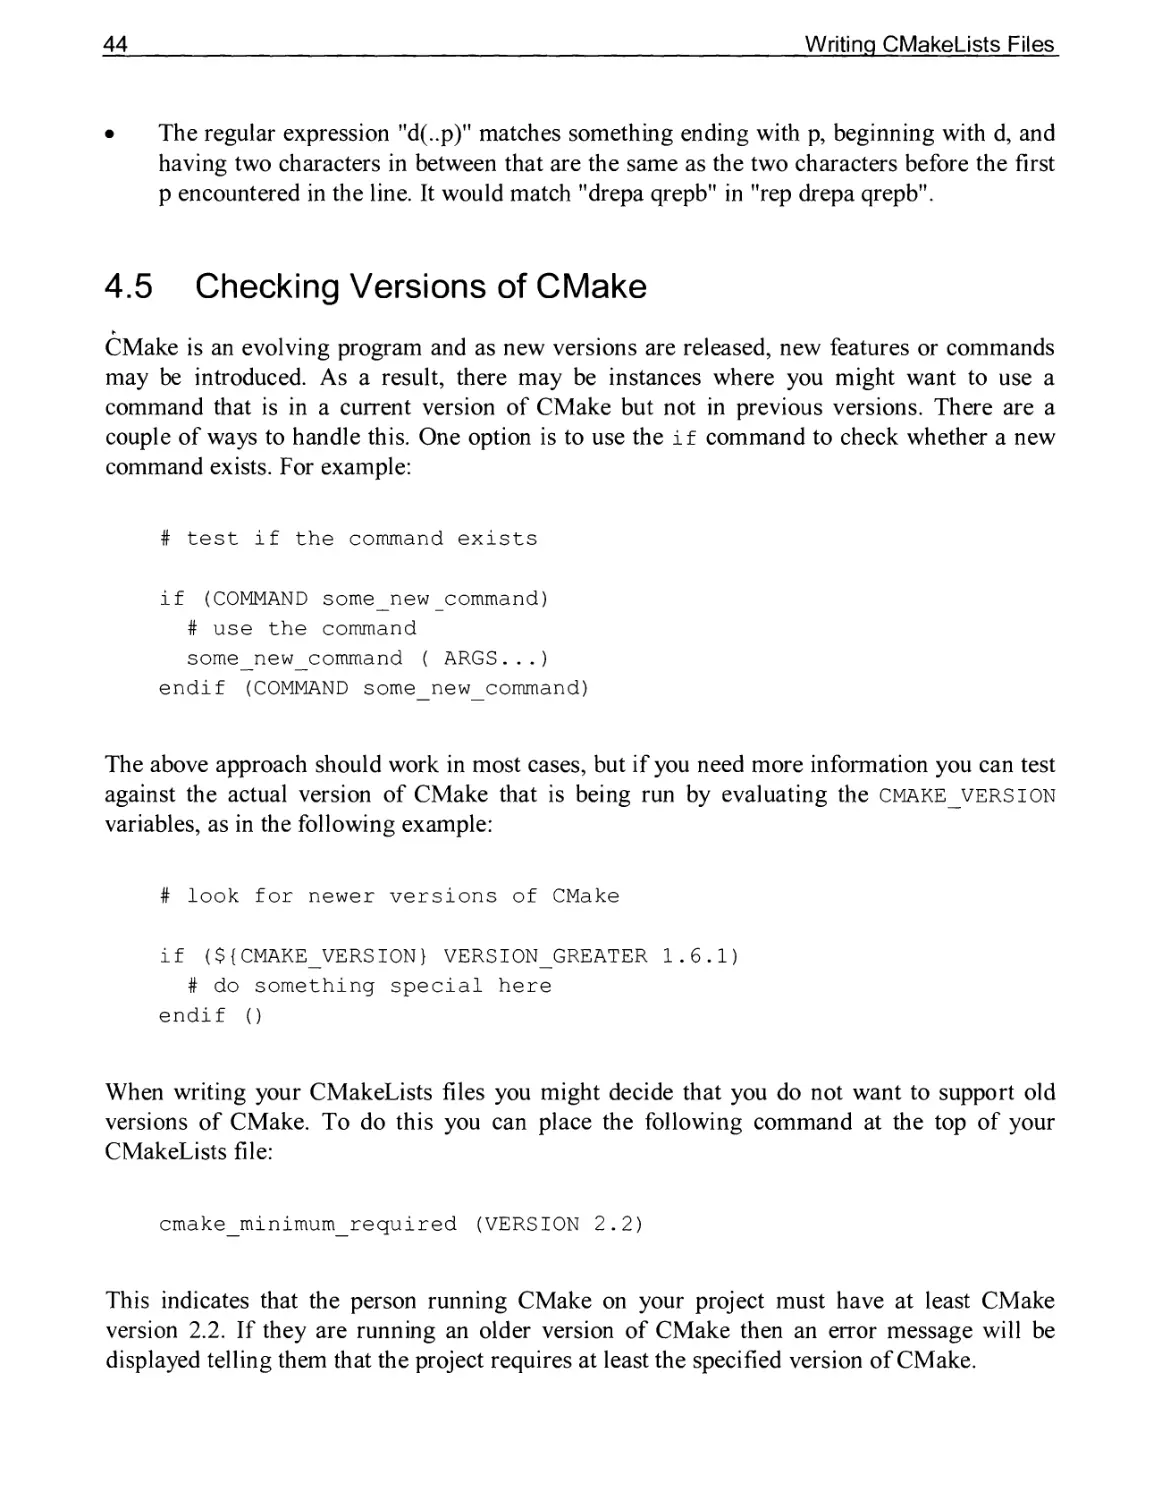 4.5 Checking Versions of CMake